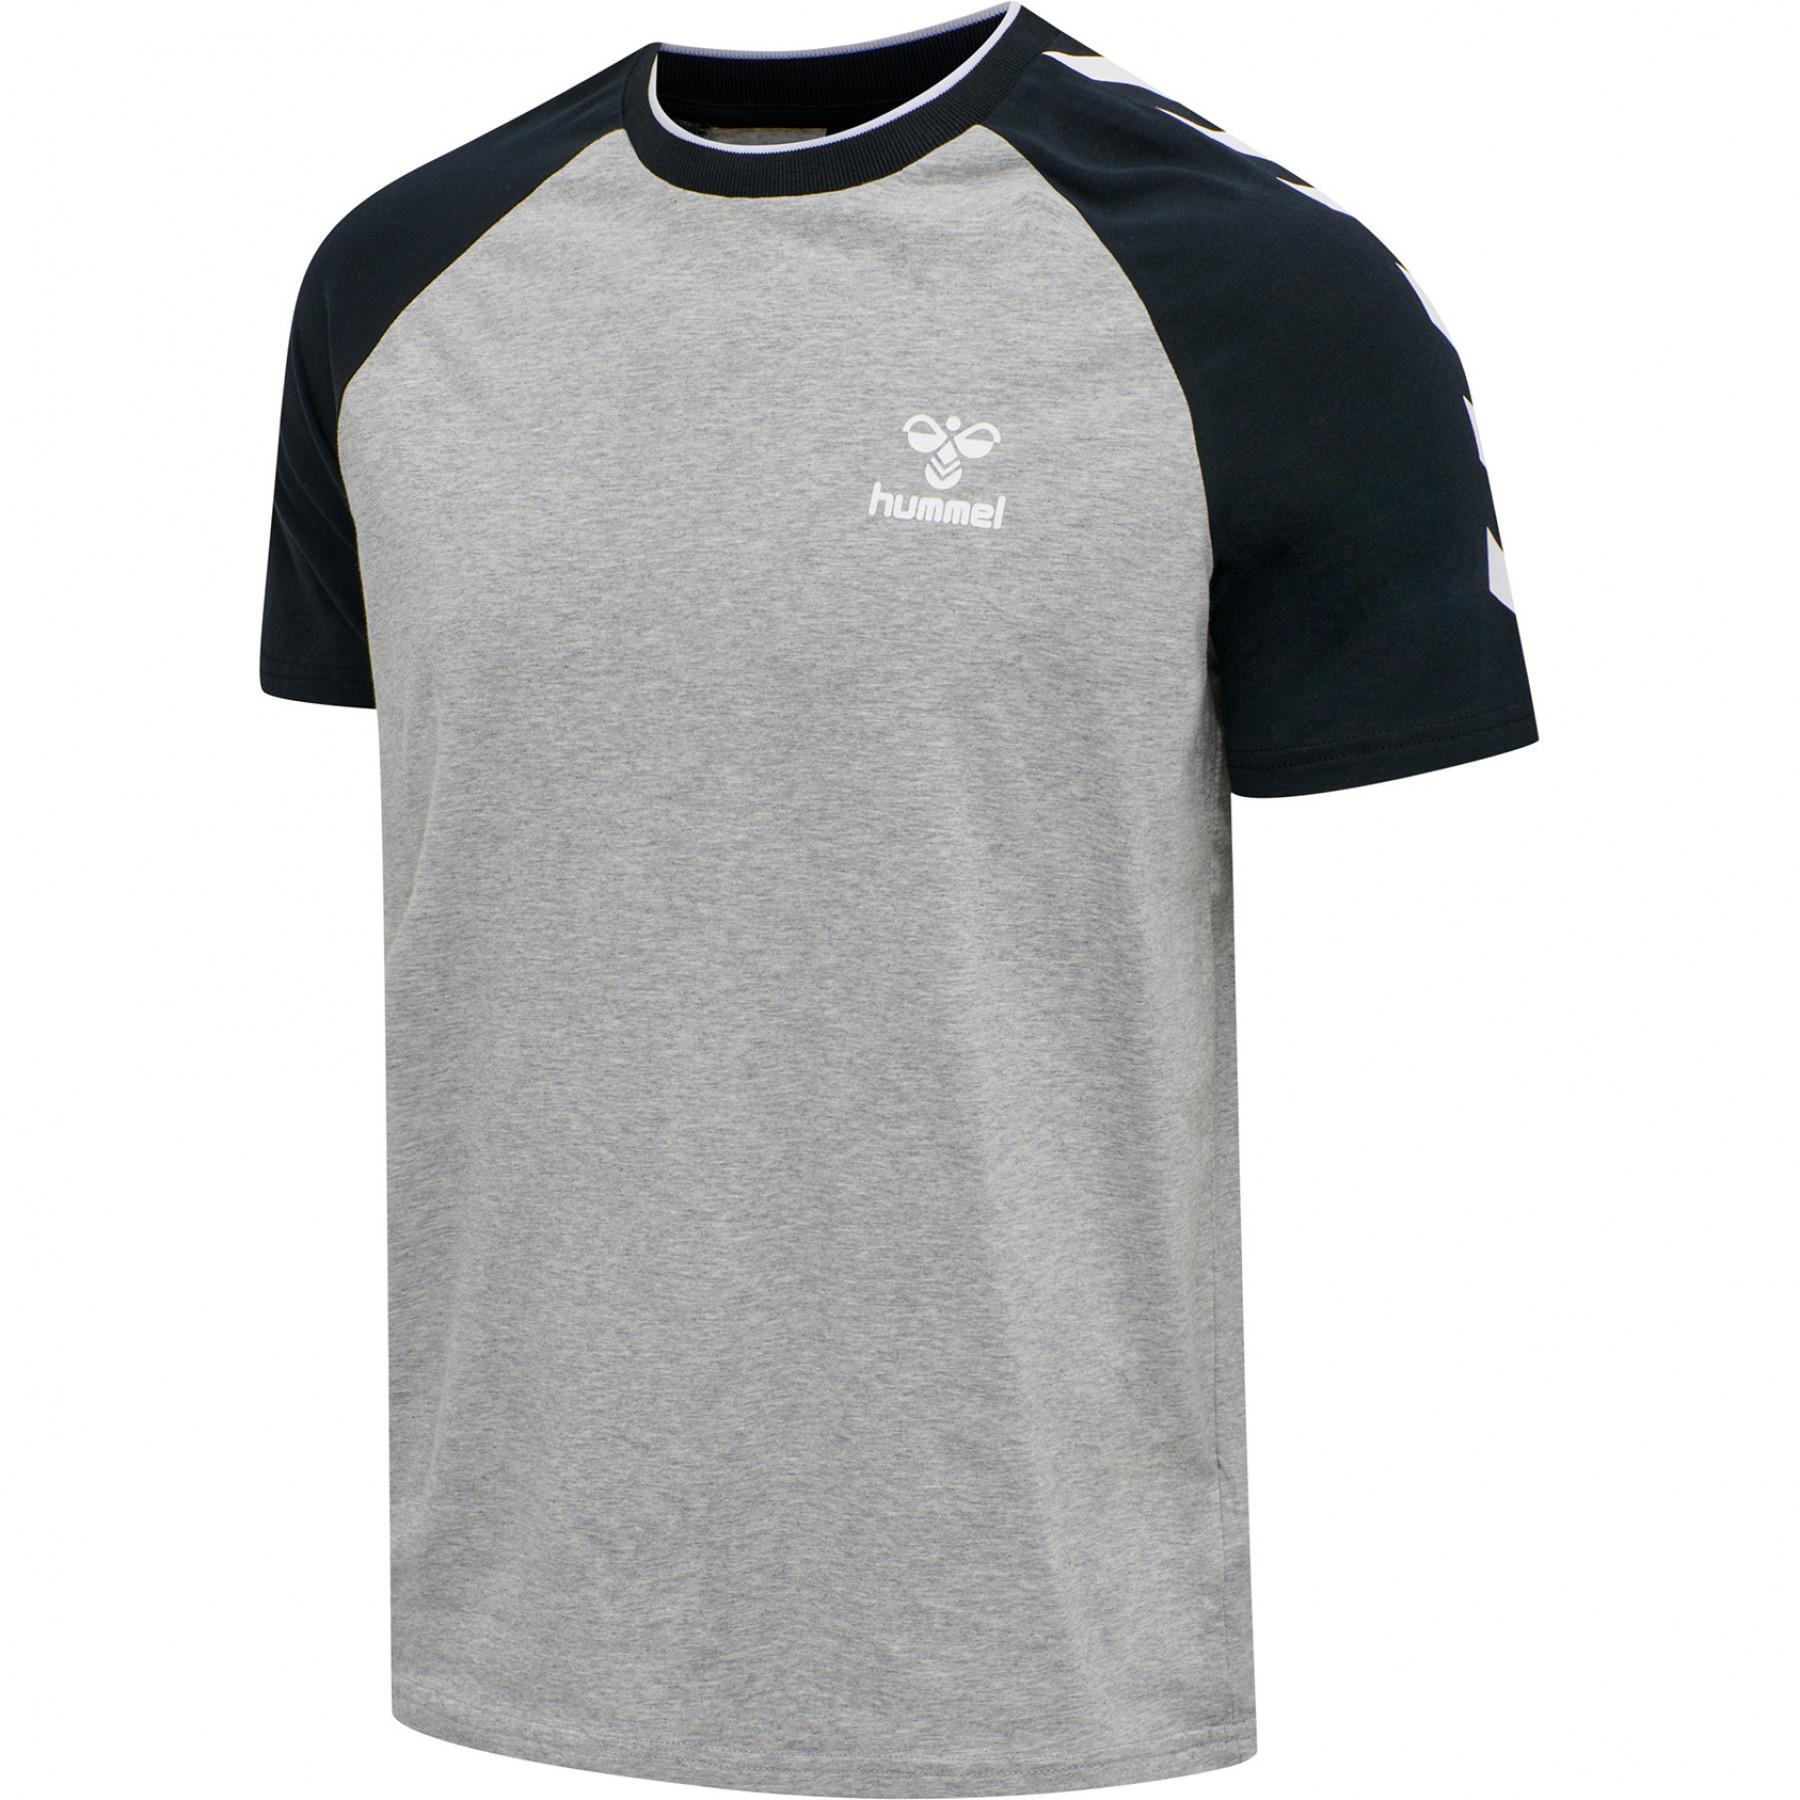 T-shirt Hummel hmlmark - and - - wear Handball Textile polos T-shirts